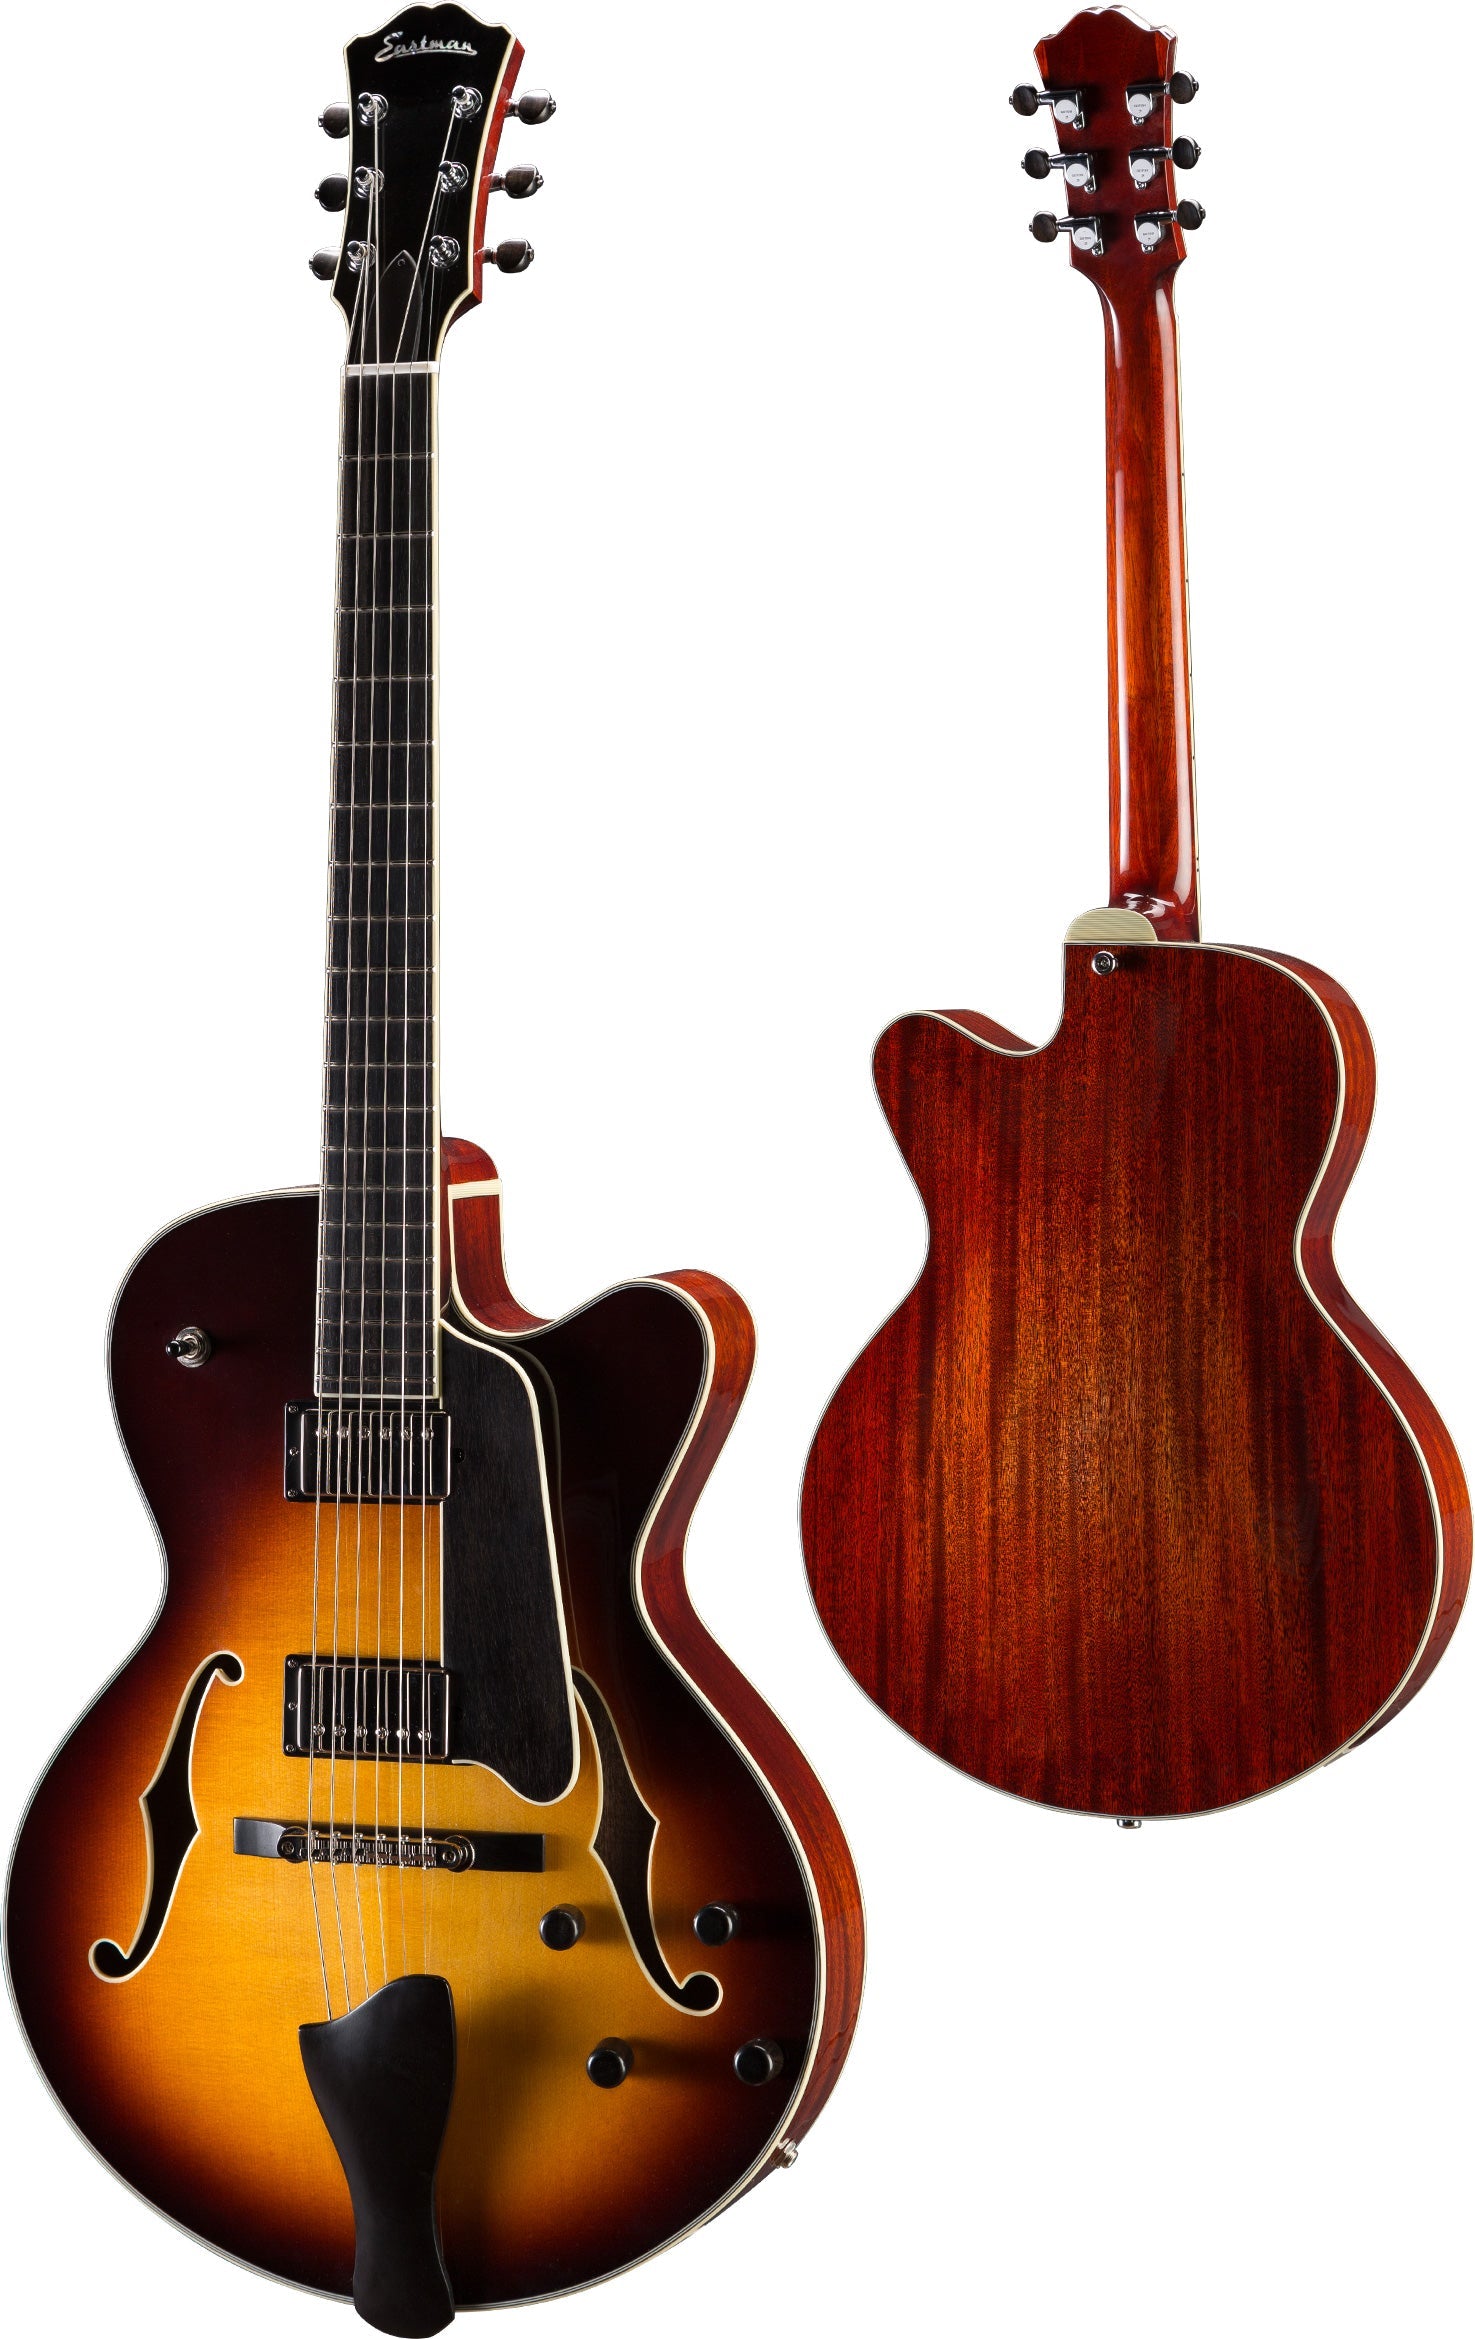 Eastman AR603CED-15 Sunburst, Electric Guitar for sale at Richards Guitars.